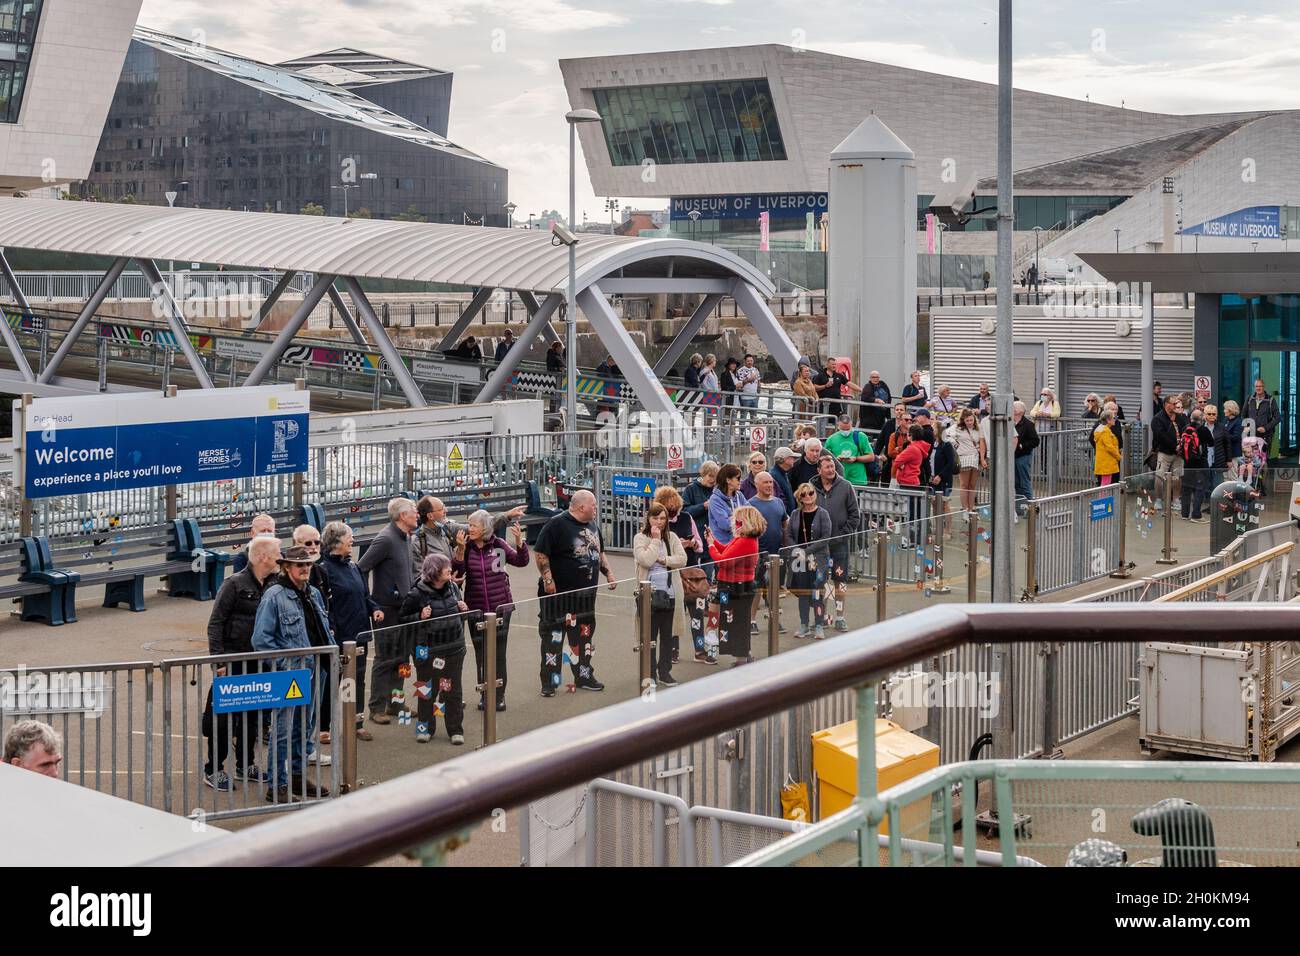 Passengers prepare to board Mersey Ferry 'Snowdrop' at Pier Head, Liverpool, Merseyside, UK. Stock Photo